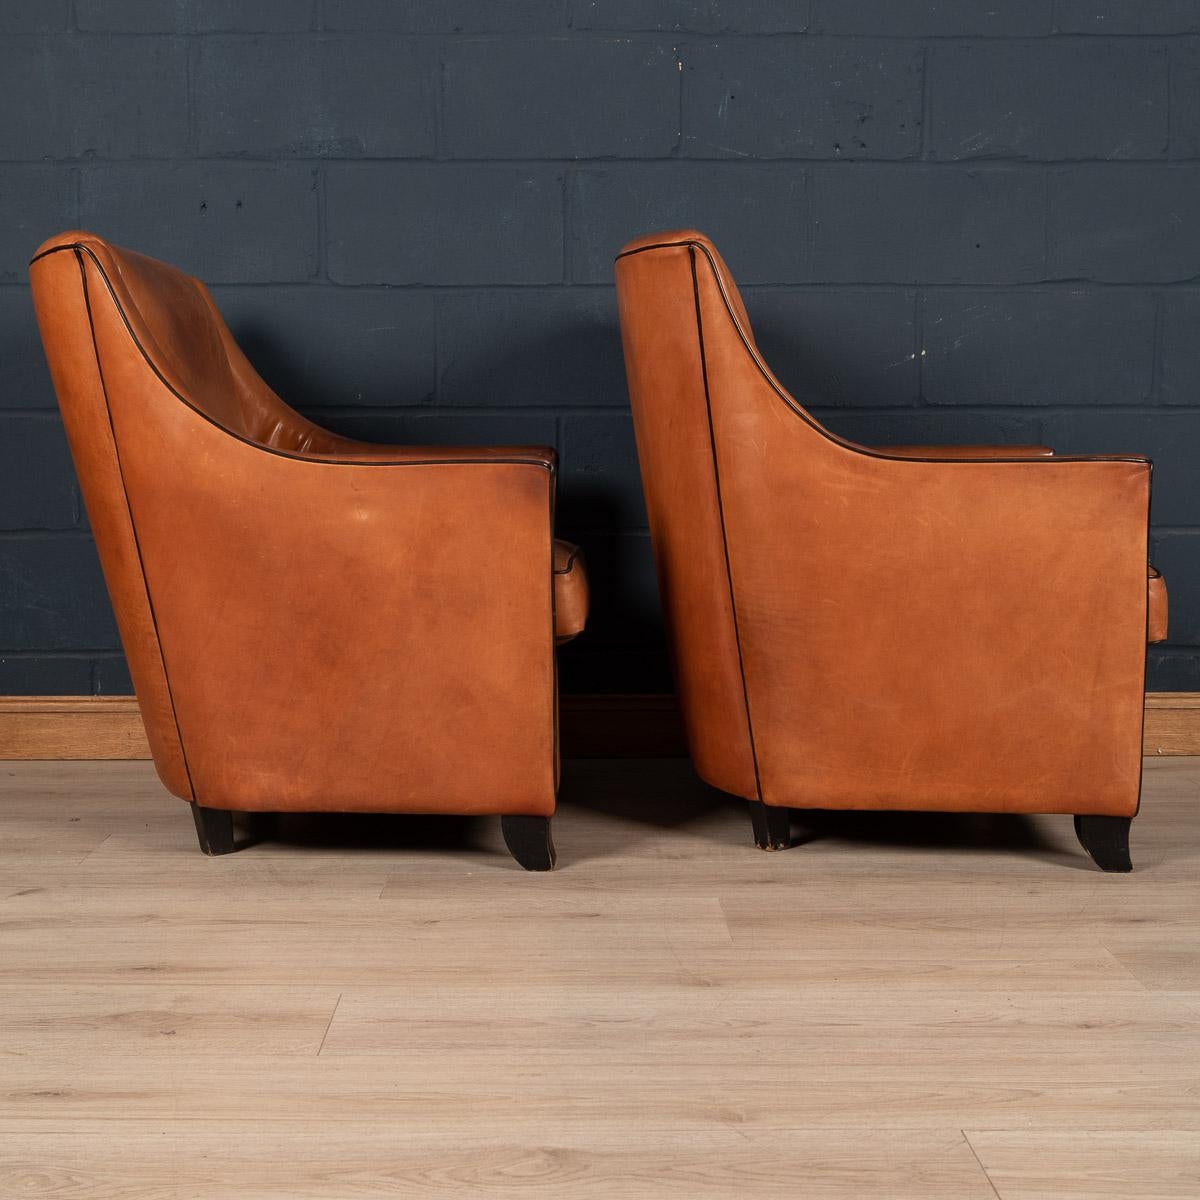 20th Century Pair of Art Deco Style Dutch Sheepskin Leather Club Chairs 1